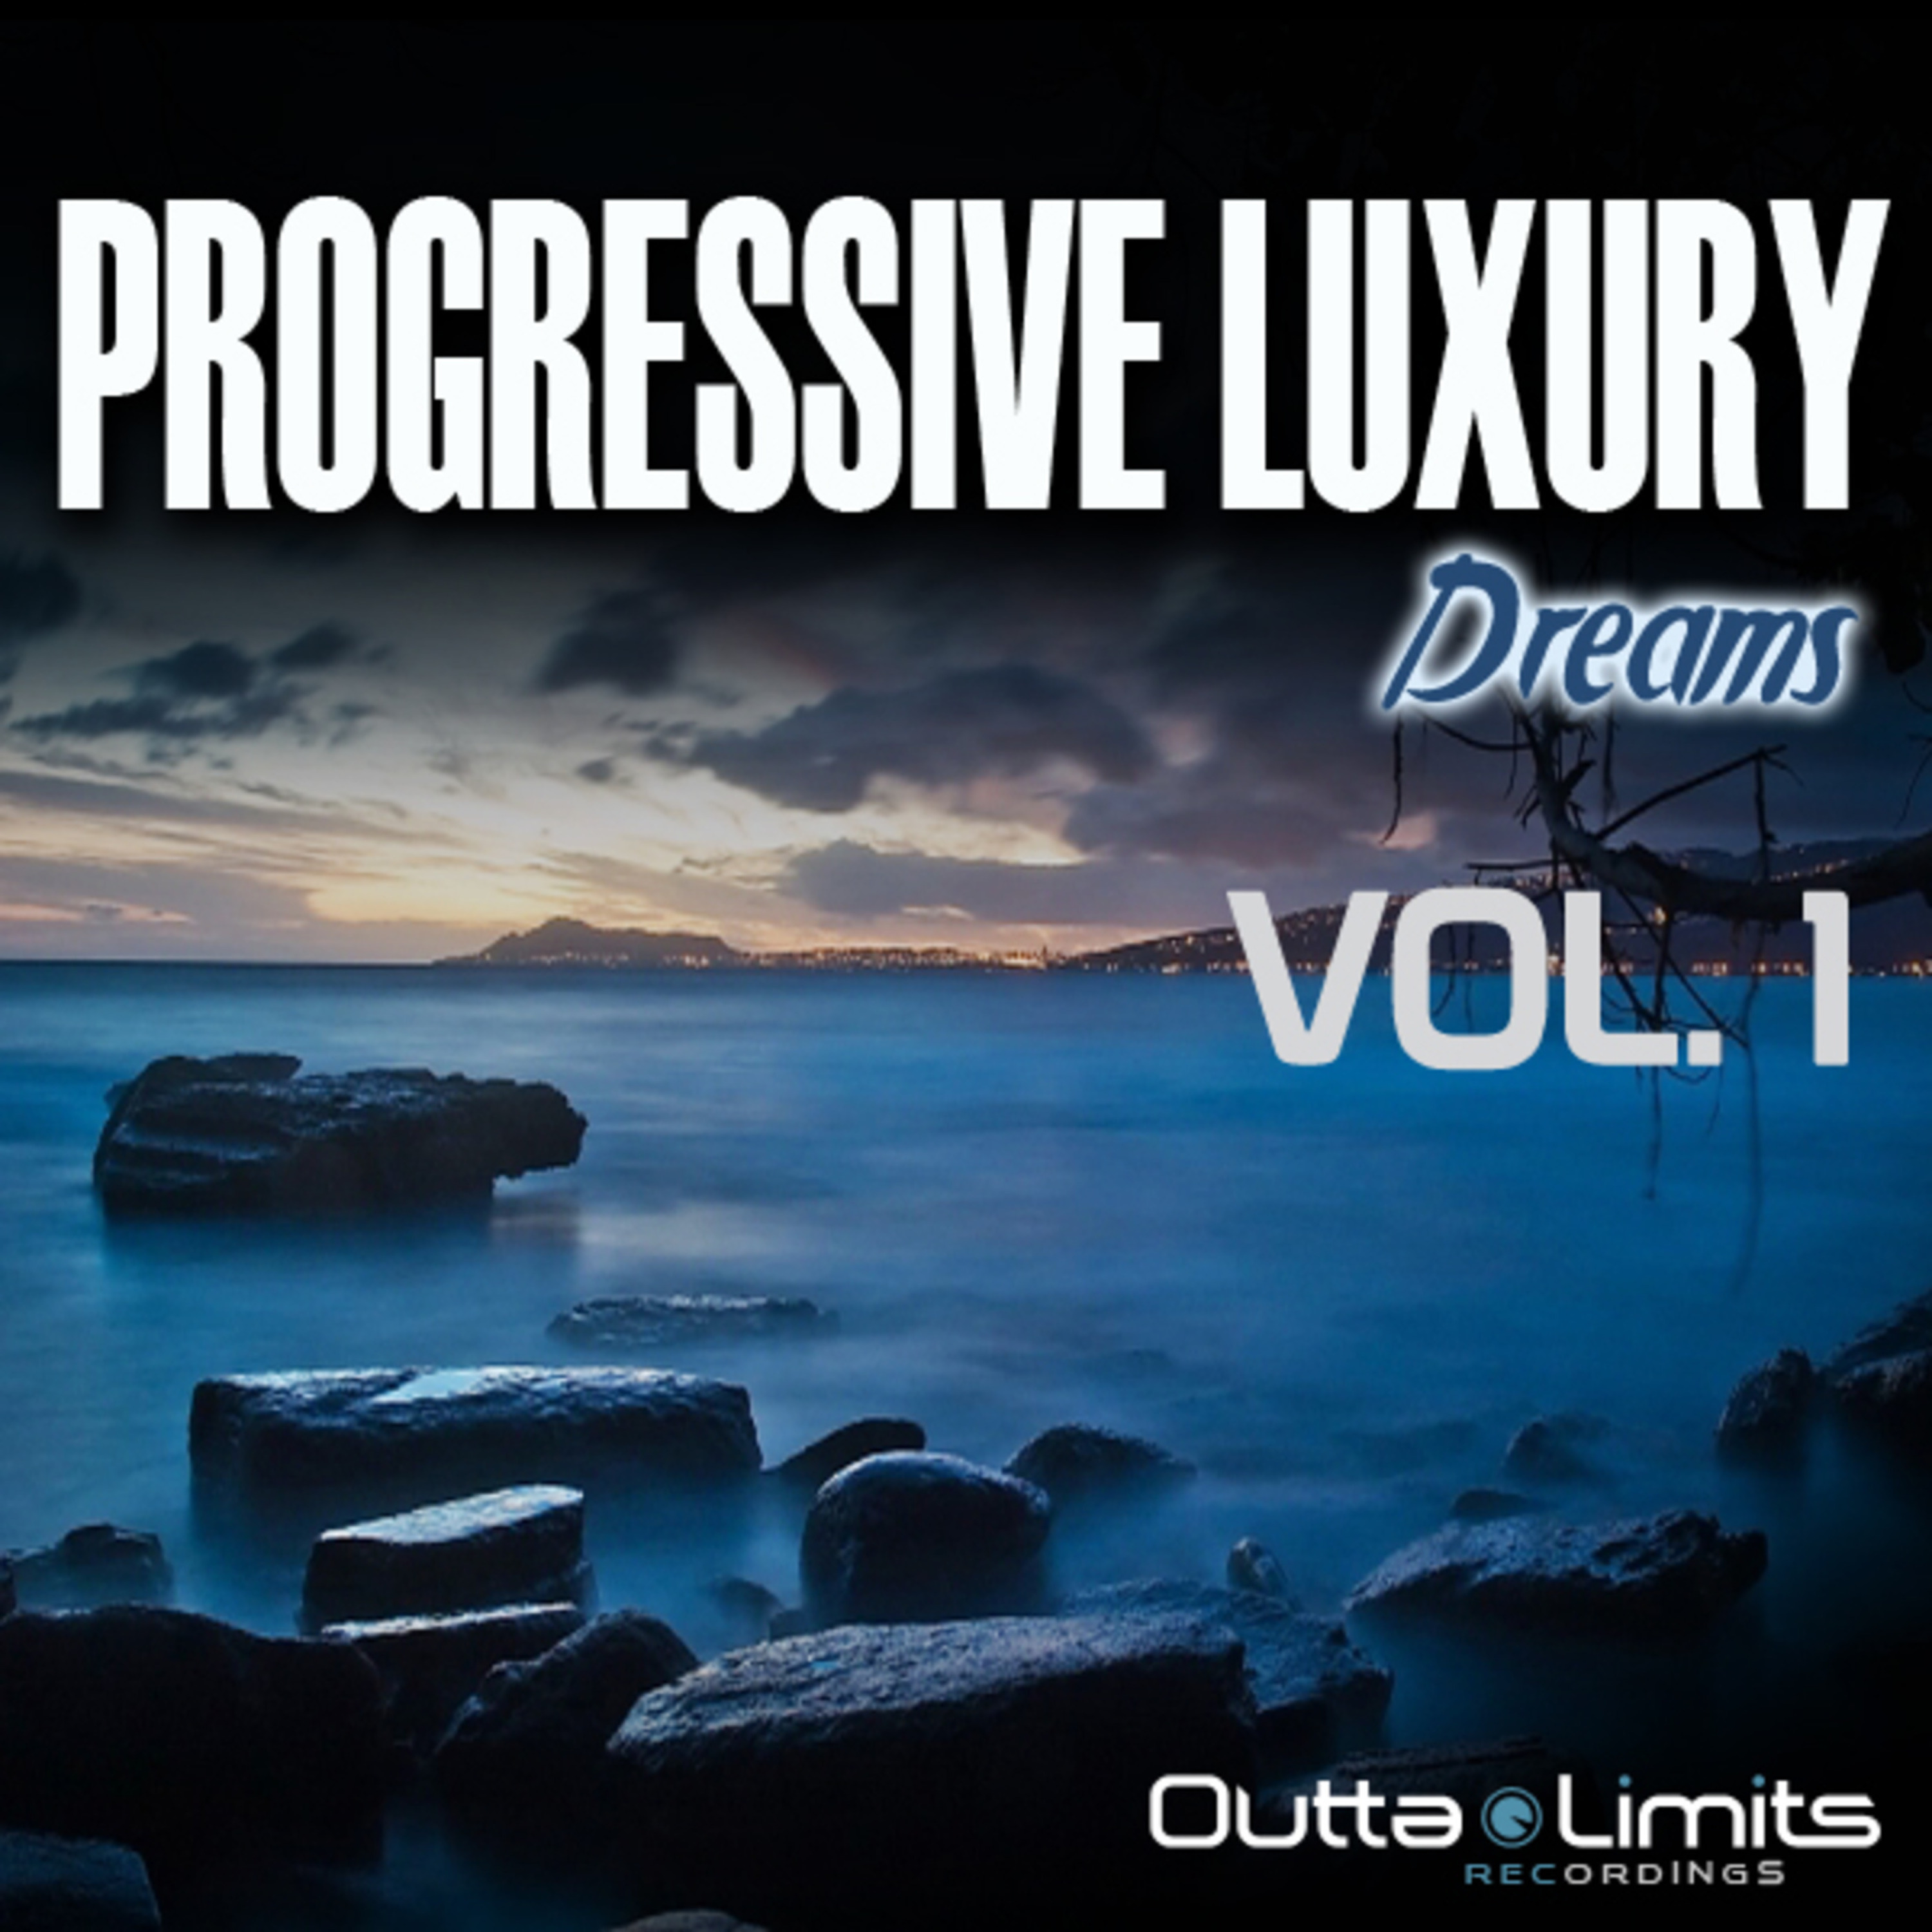 Progressive Luxury Dreams, Vol. 1